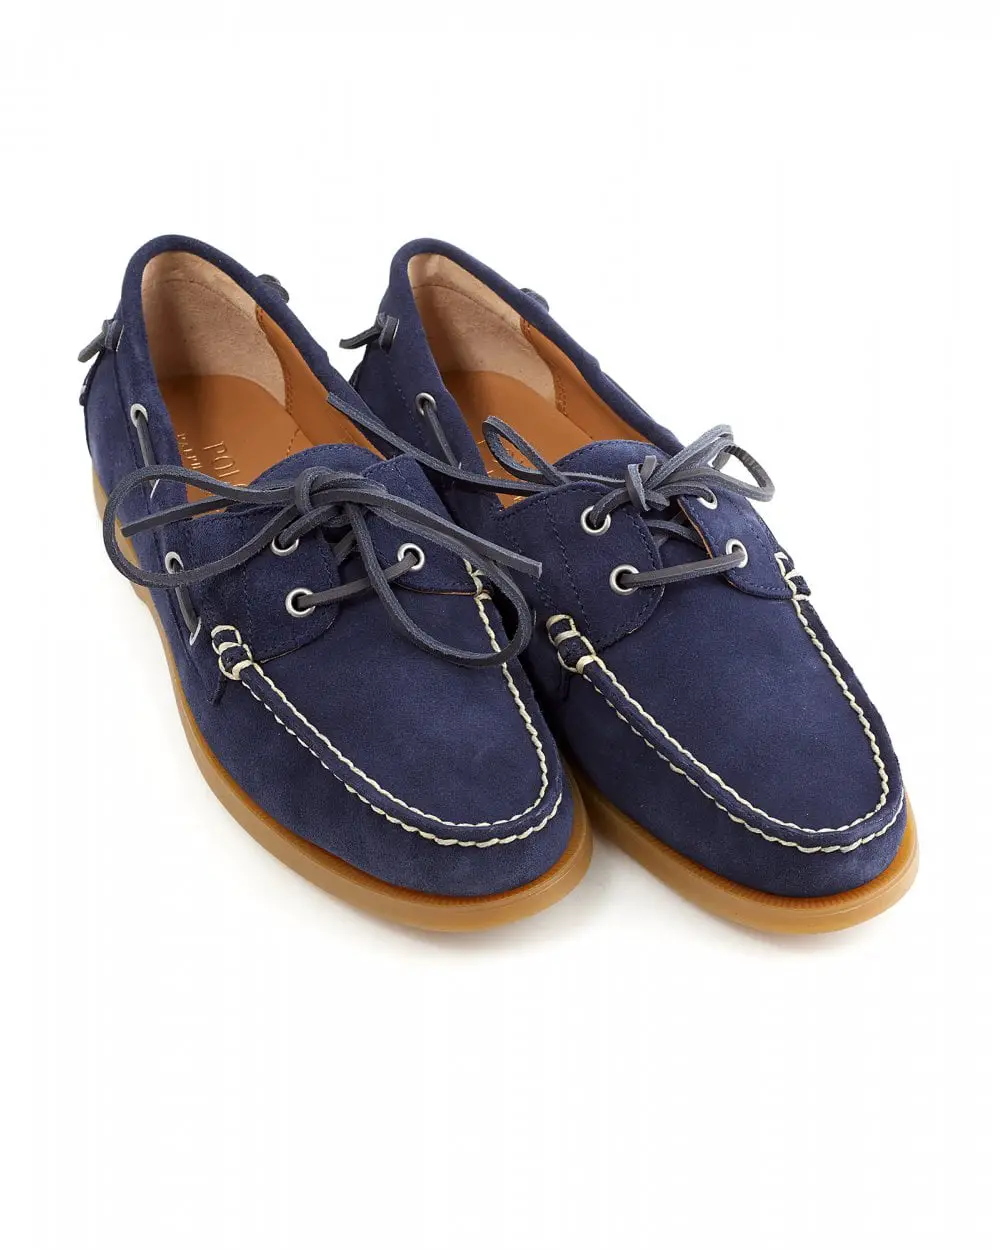 Ralph Lauren Mens Classic Suede Newport Navy Blue Boat Shoes